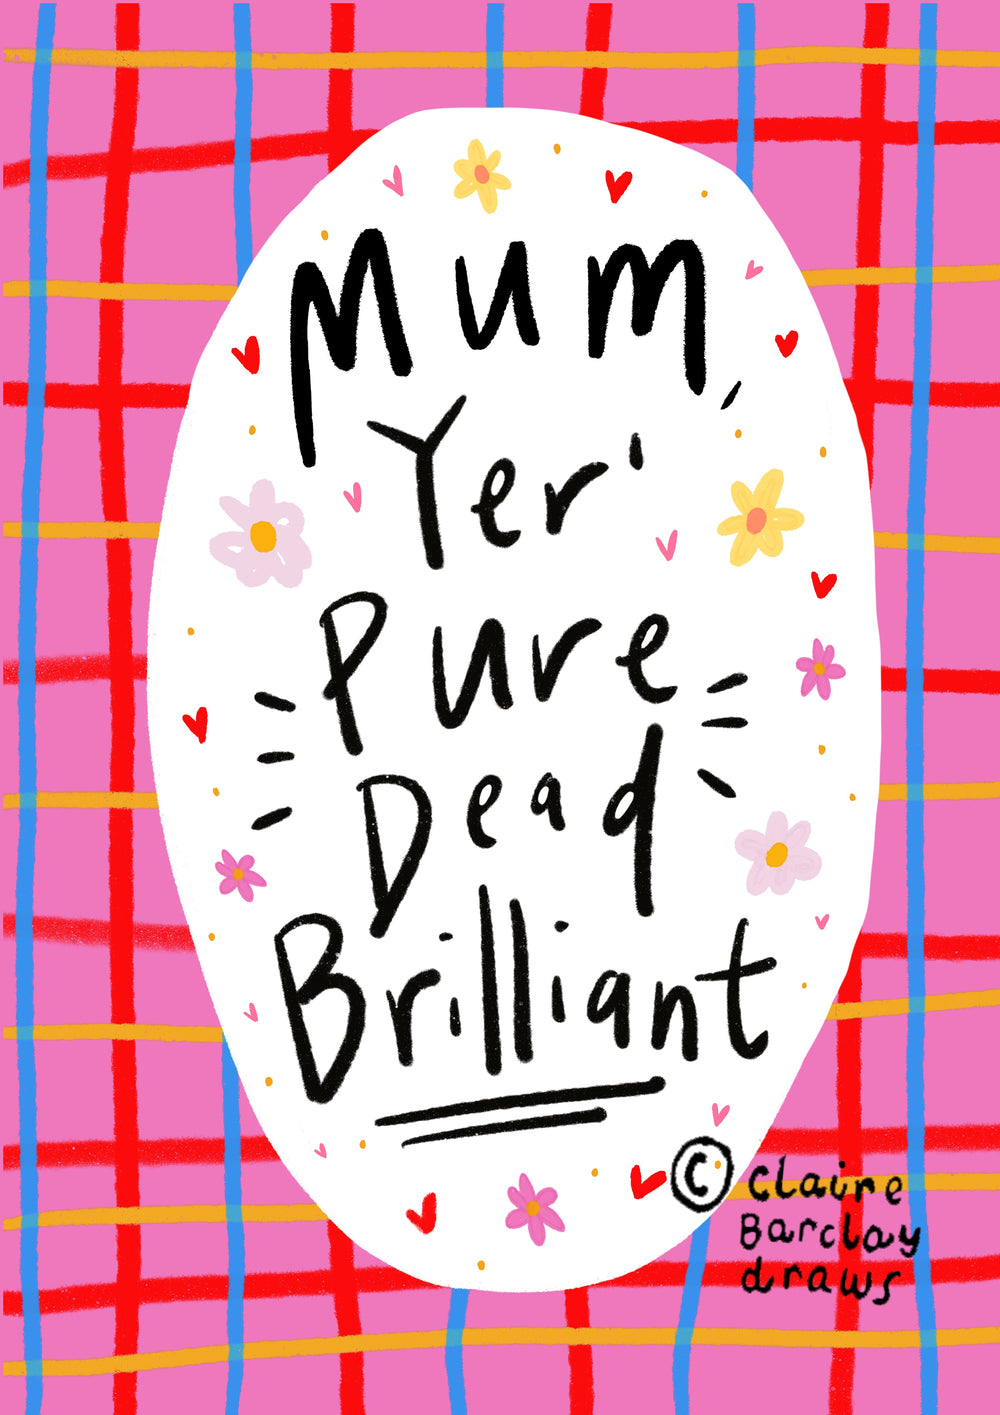 Mum, Yer' Pure Dead Brilliant! Greetings Card